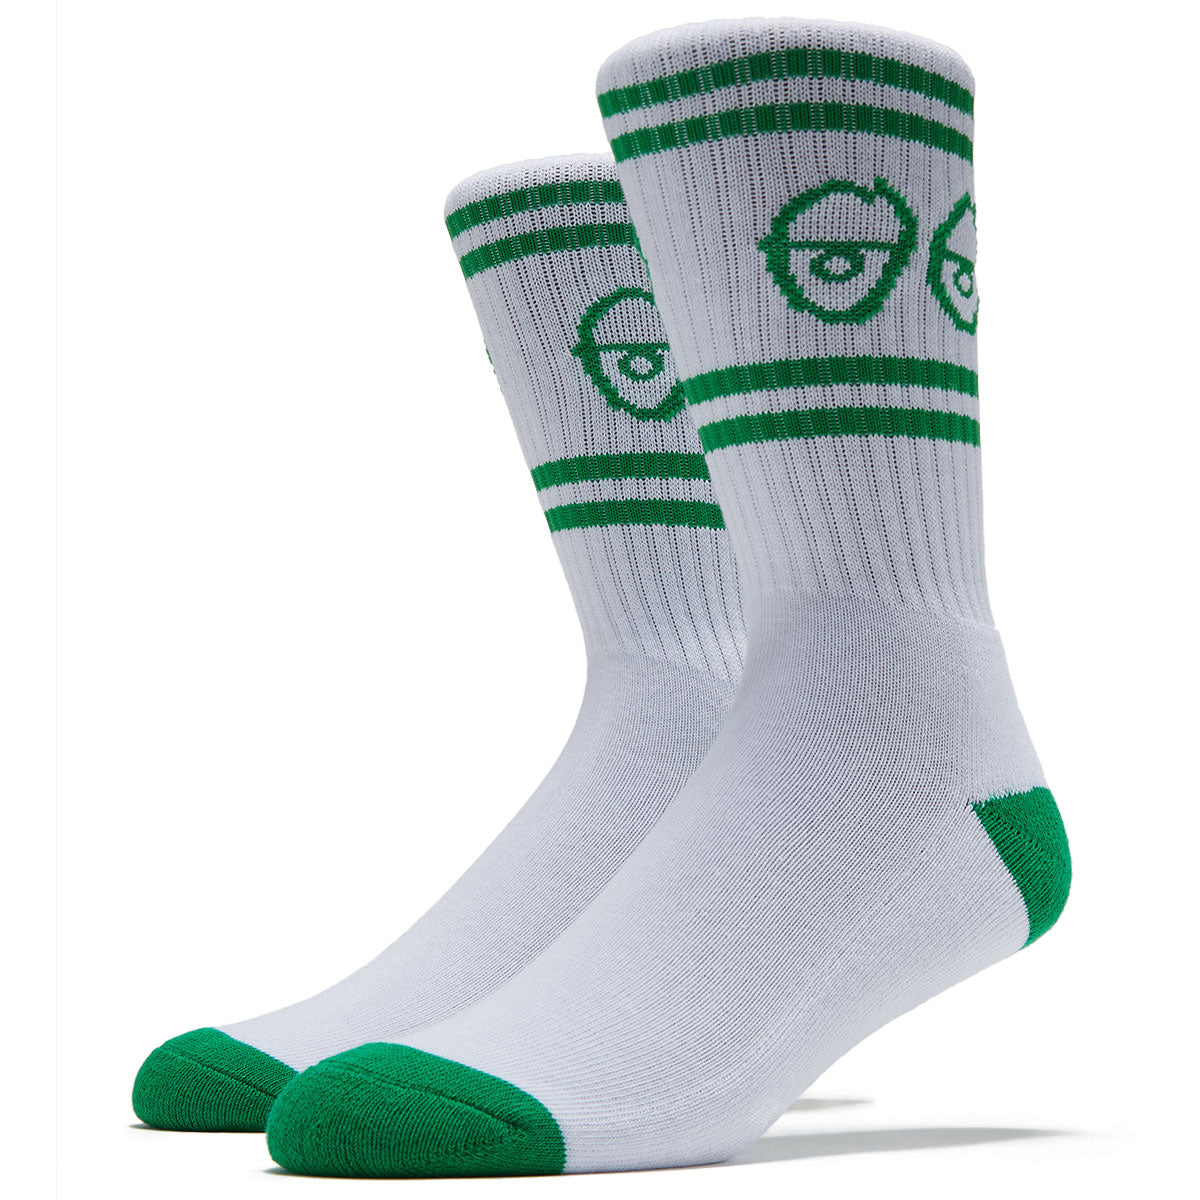 Krooked Eyes Socks - White/Green image 1